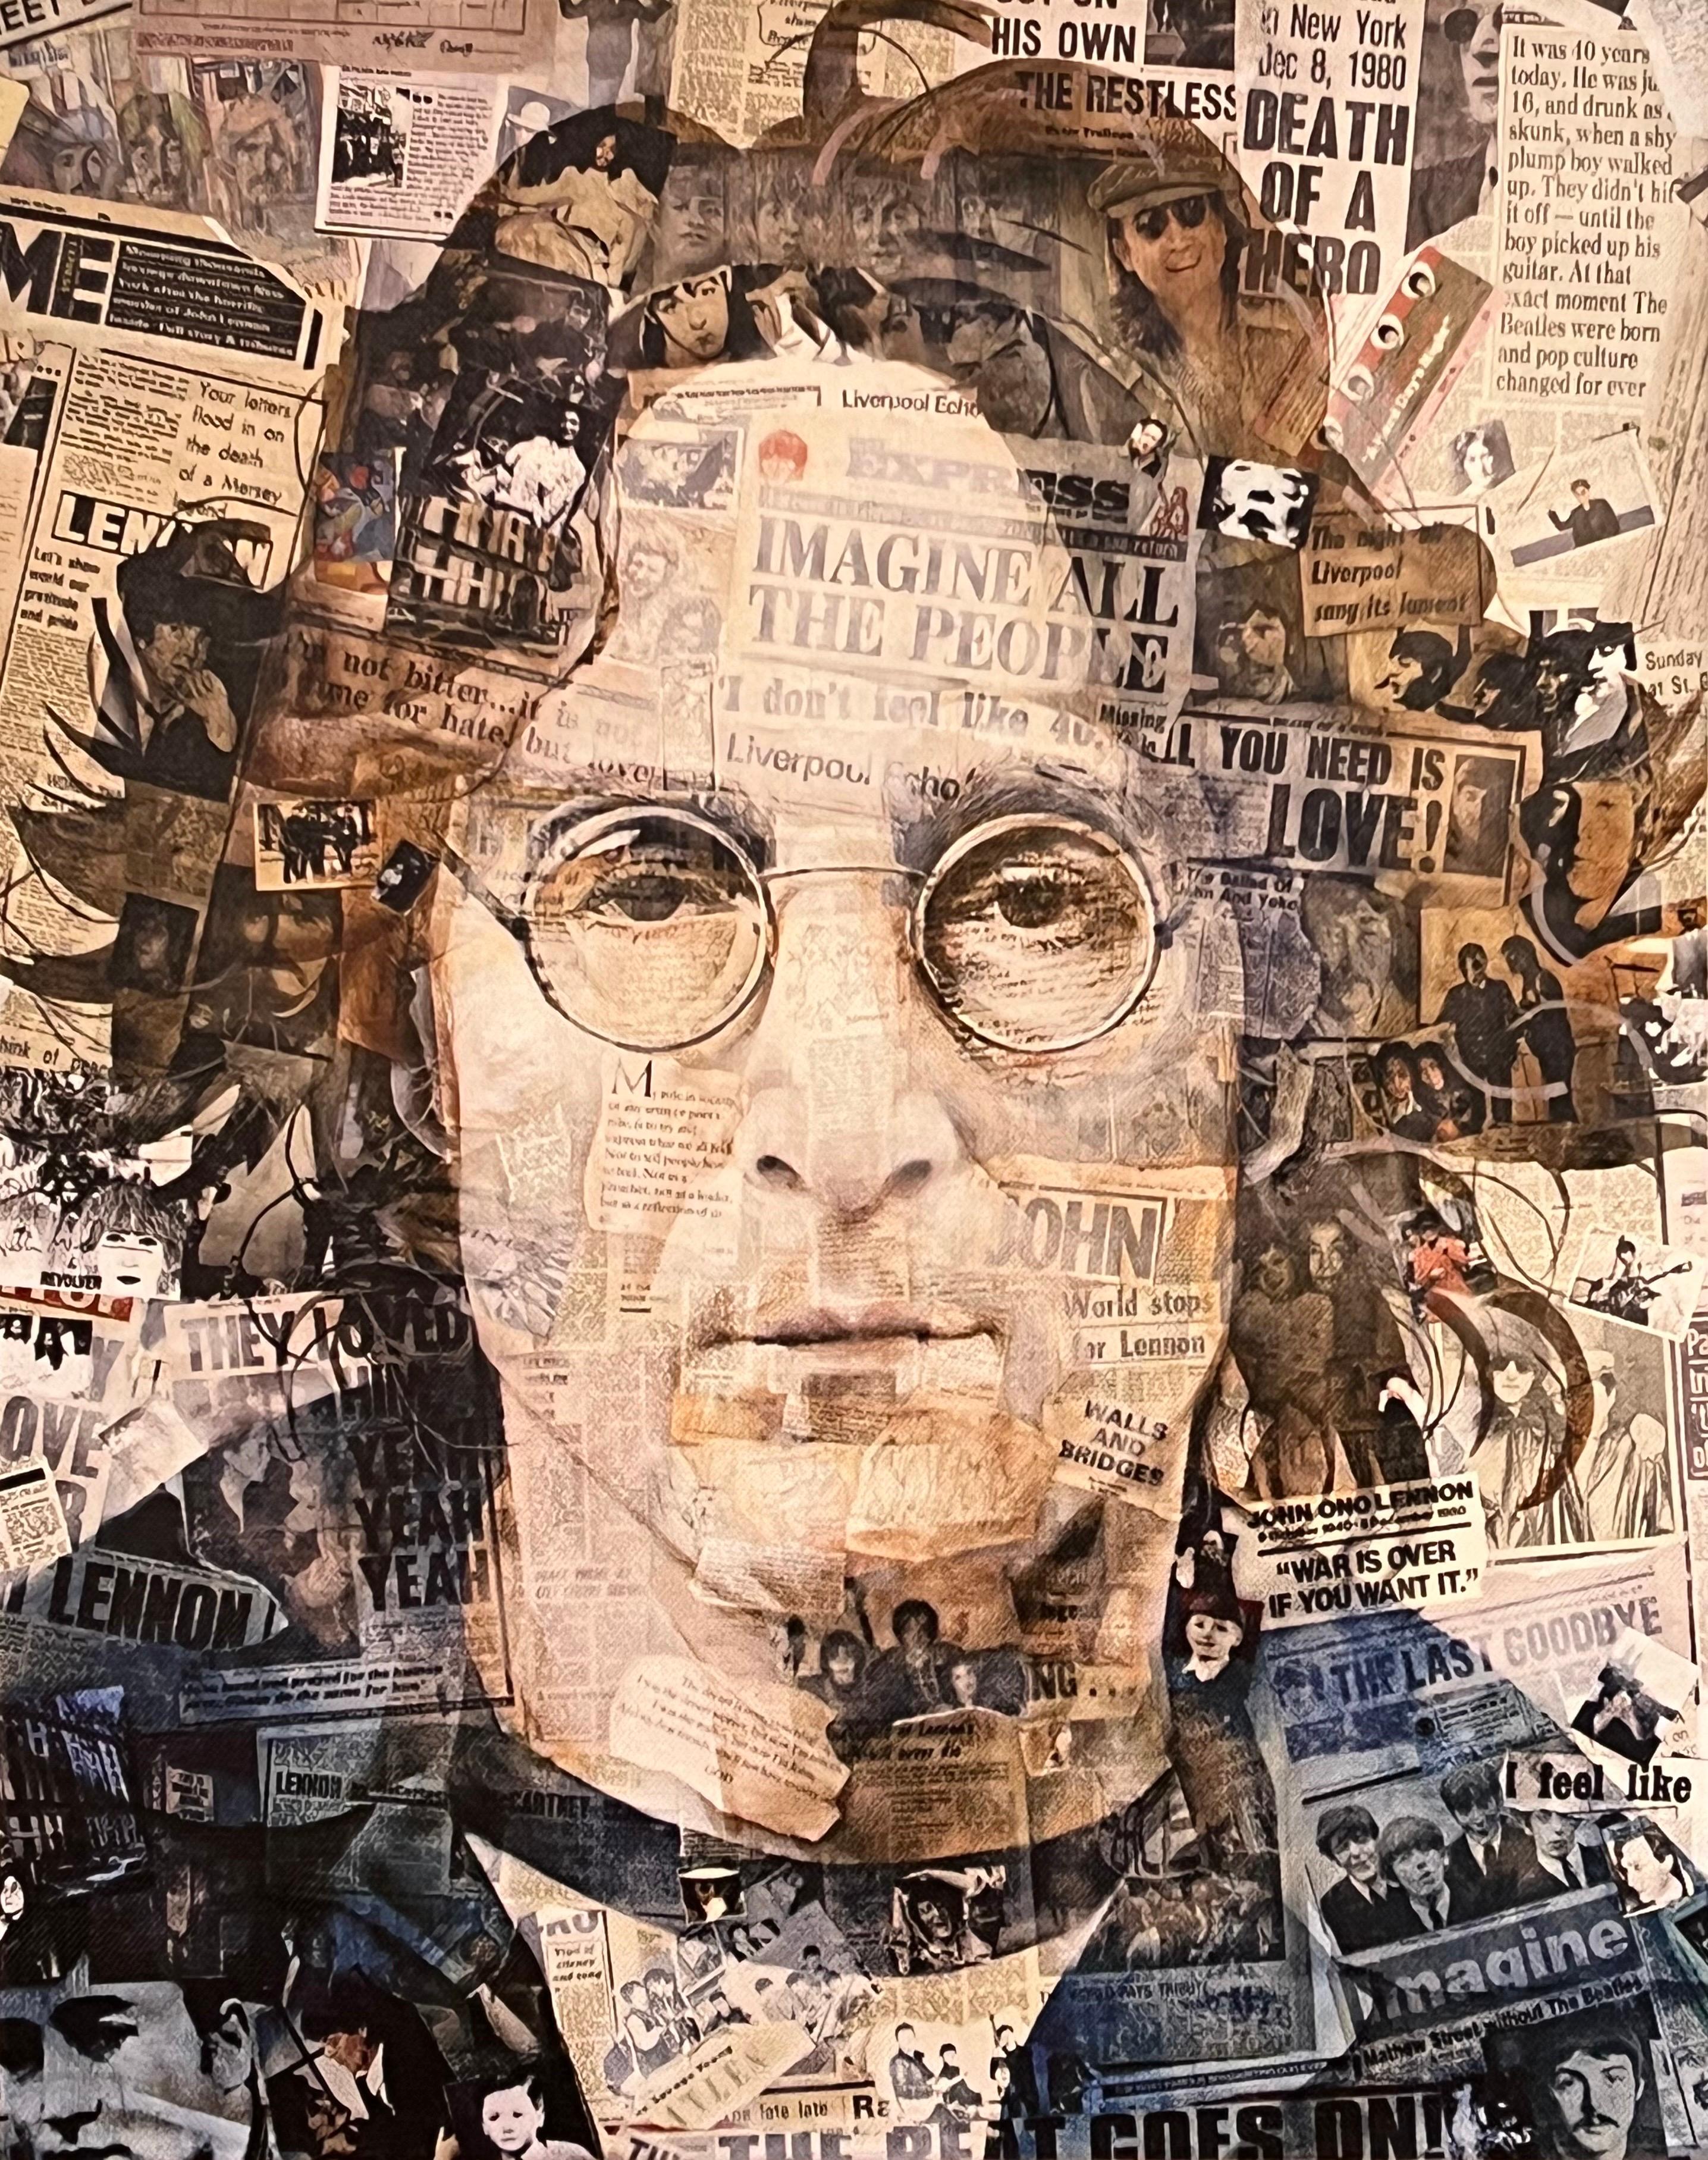 Unknown Portrait Print - John Lennon Collage Print on Canvas - Artwork based on the Beatles